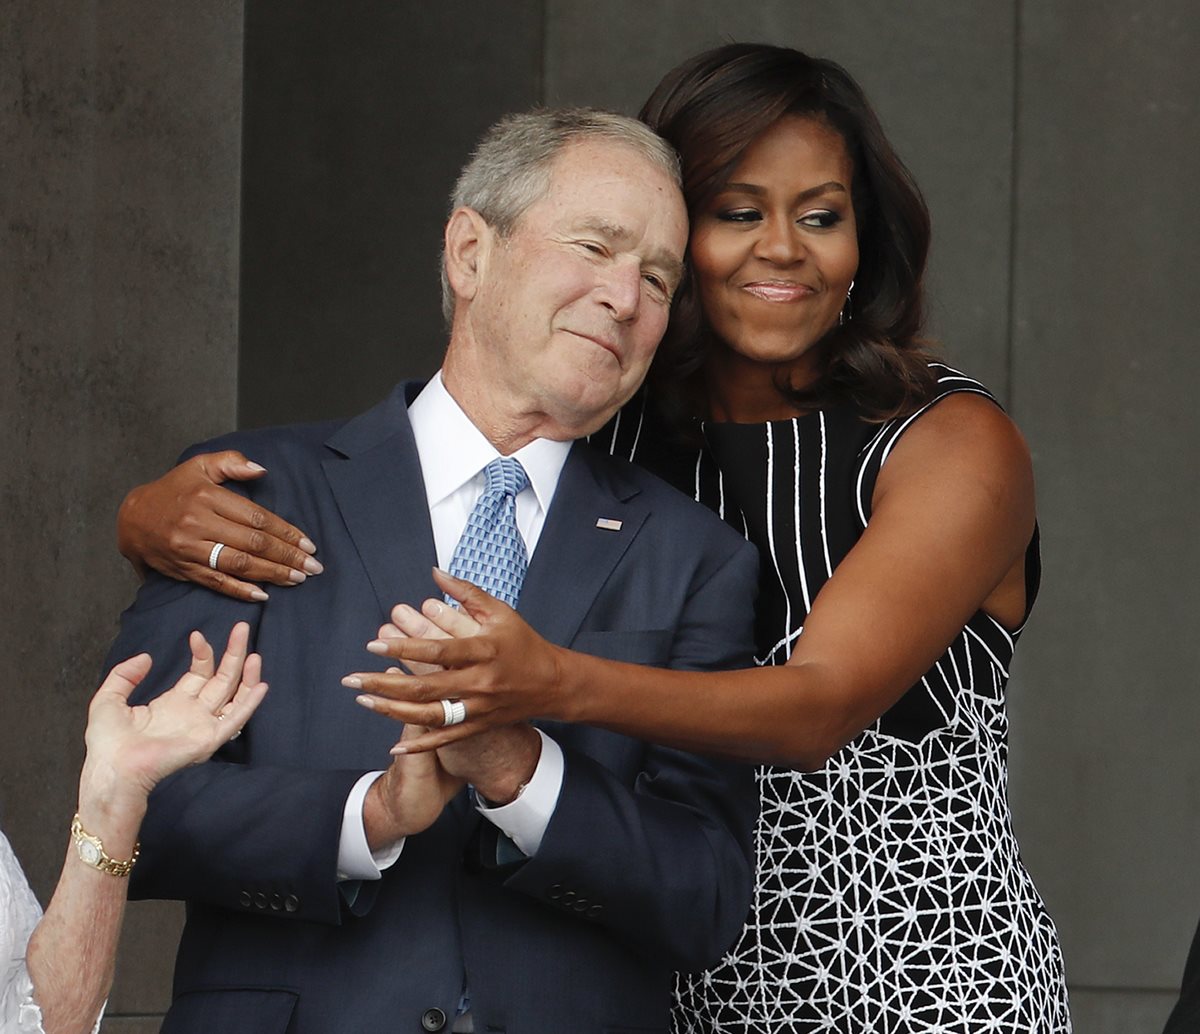 El abrazo de Michelle Obama a George W. Bush se viraliza en redes